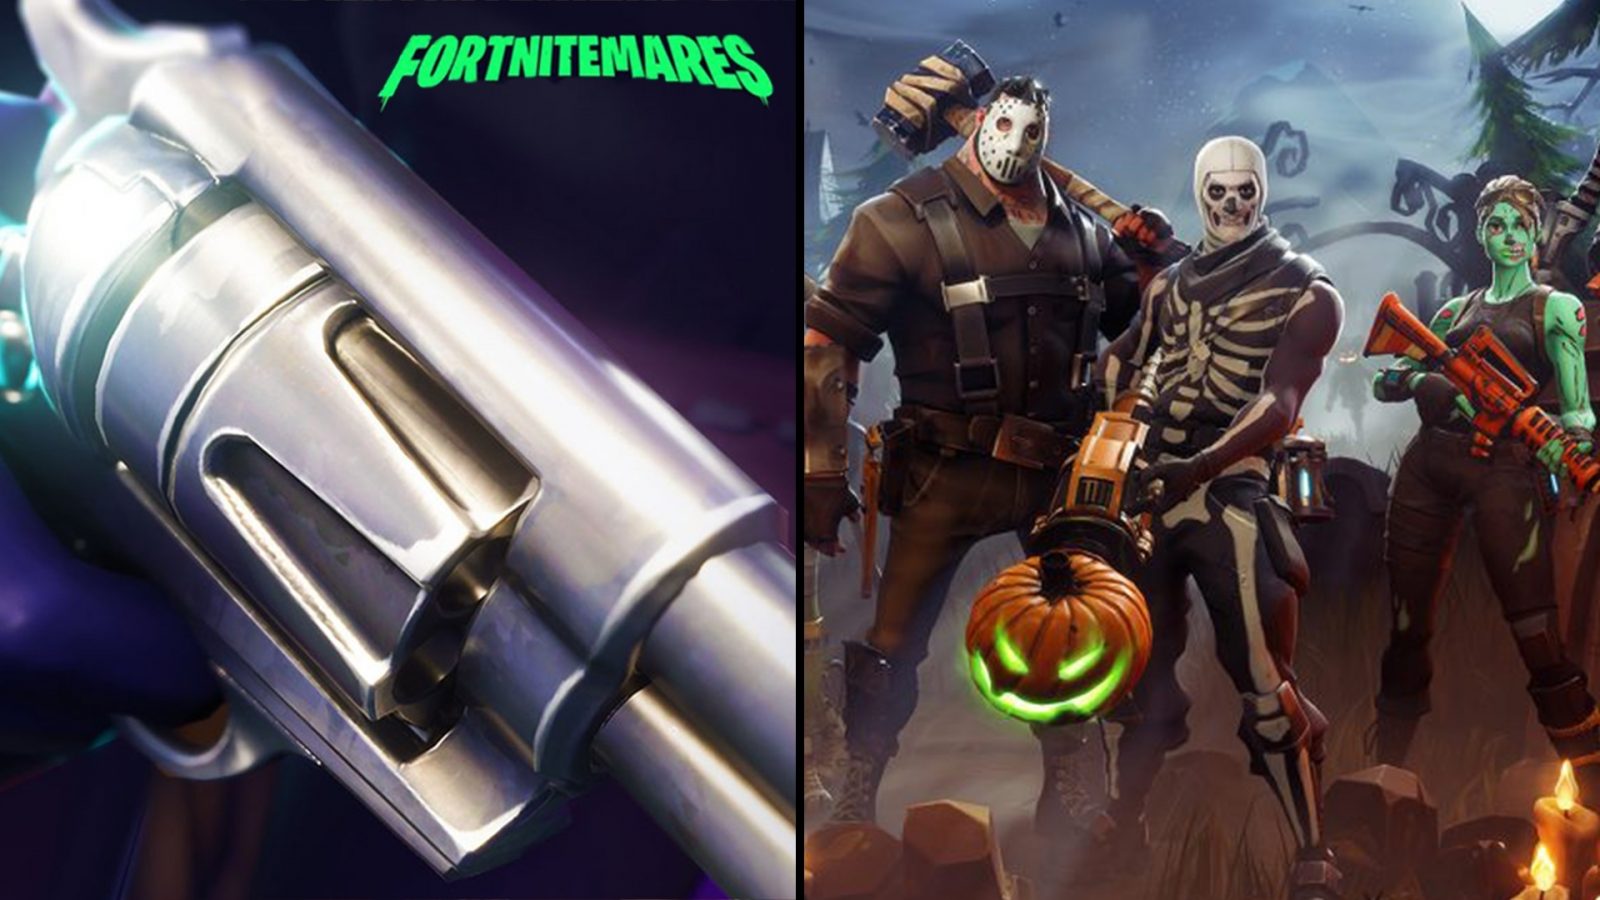 Third Fortnitemares Teaser Image Released For Fortnite Halloween